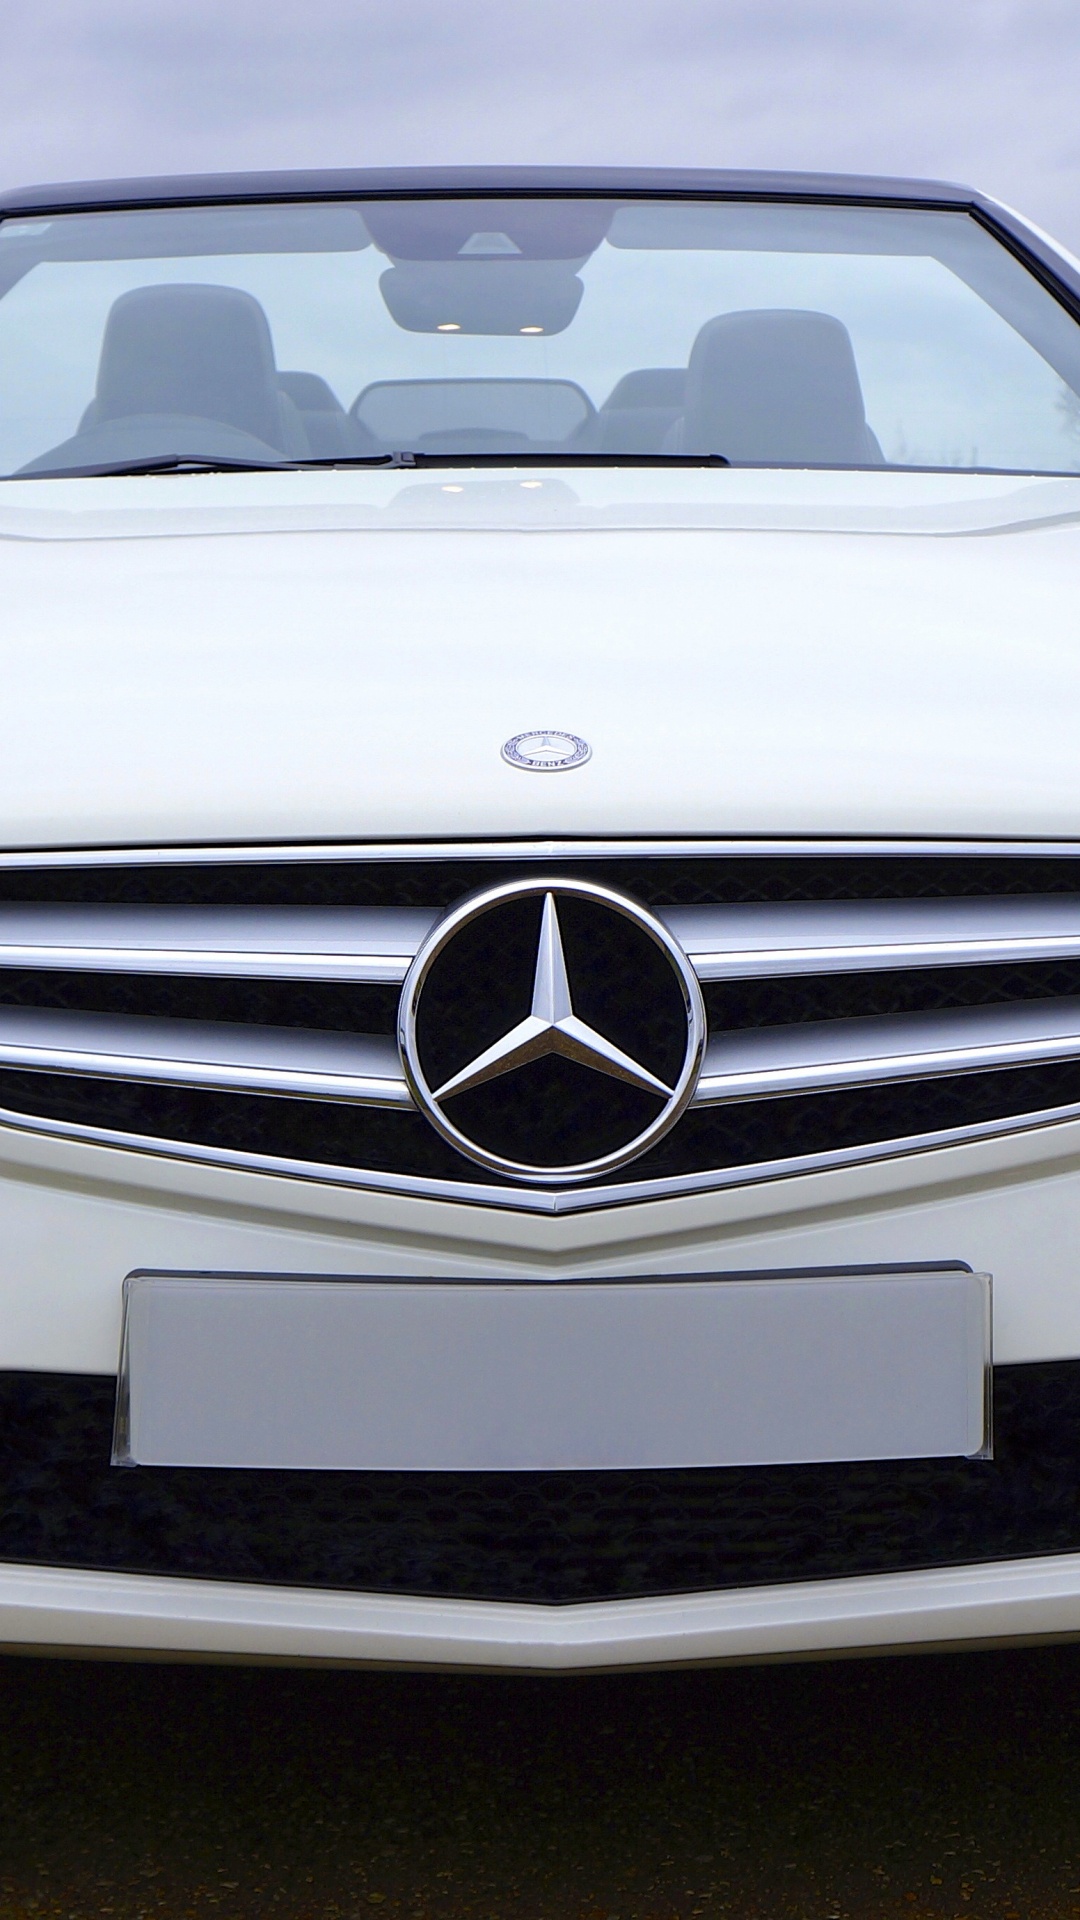 Mercedes Benz Clase c Blanco. Wallpaper in 1080x1920 Resolution